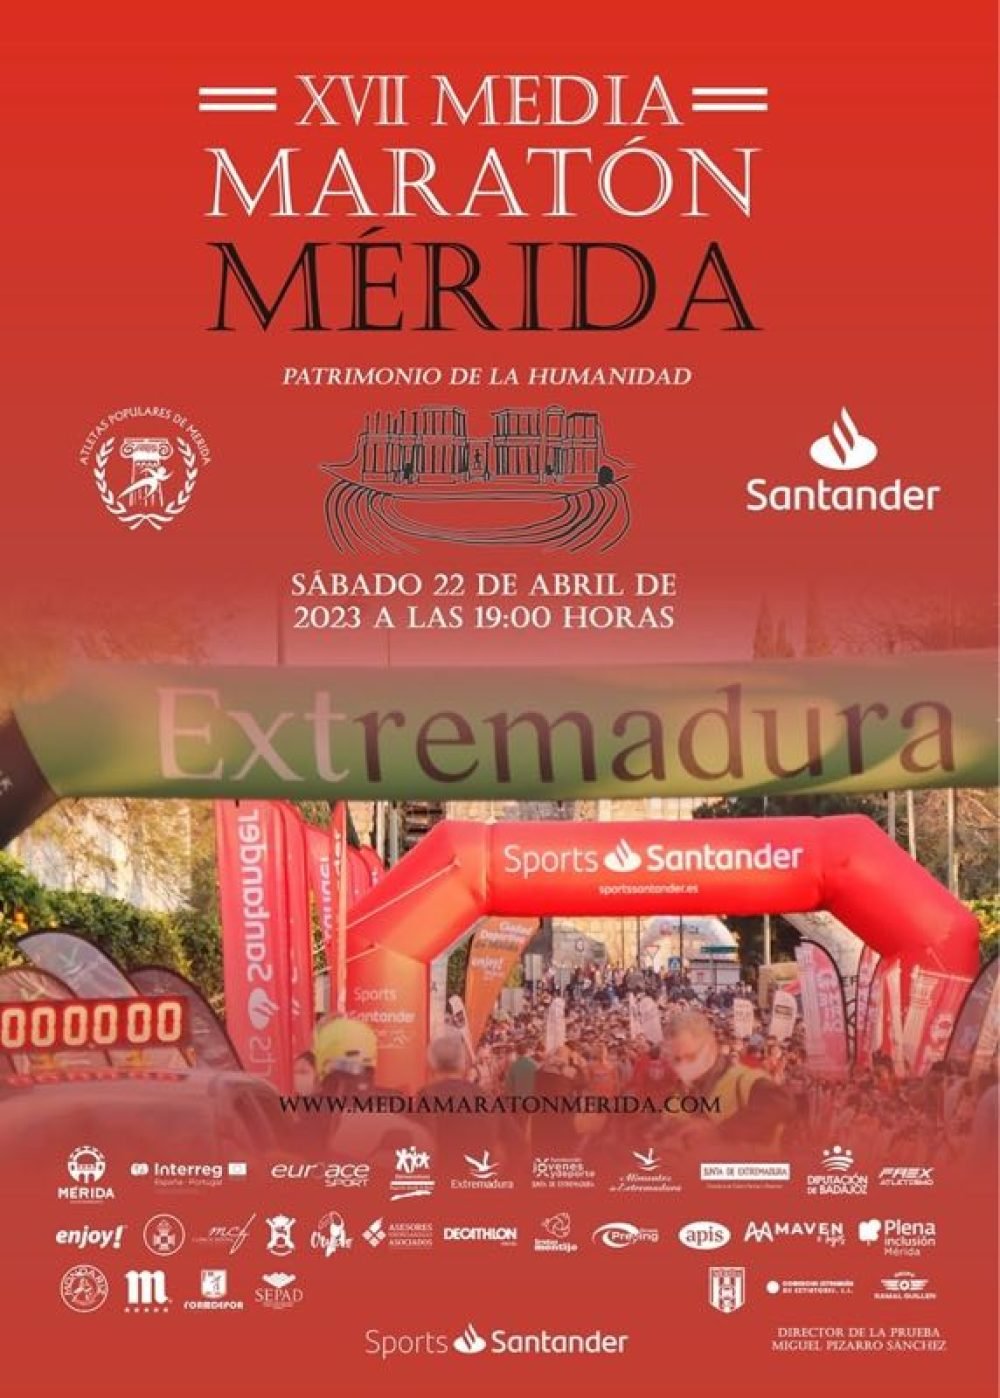 XVII Media Maratón Mérida Patrimonio de la Humanidad